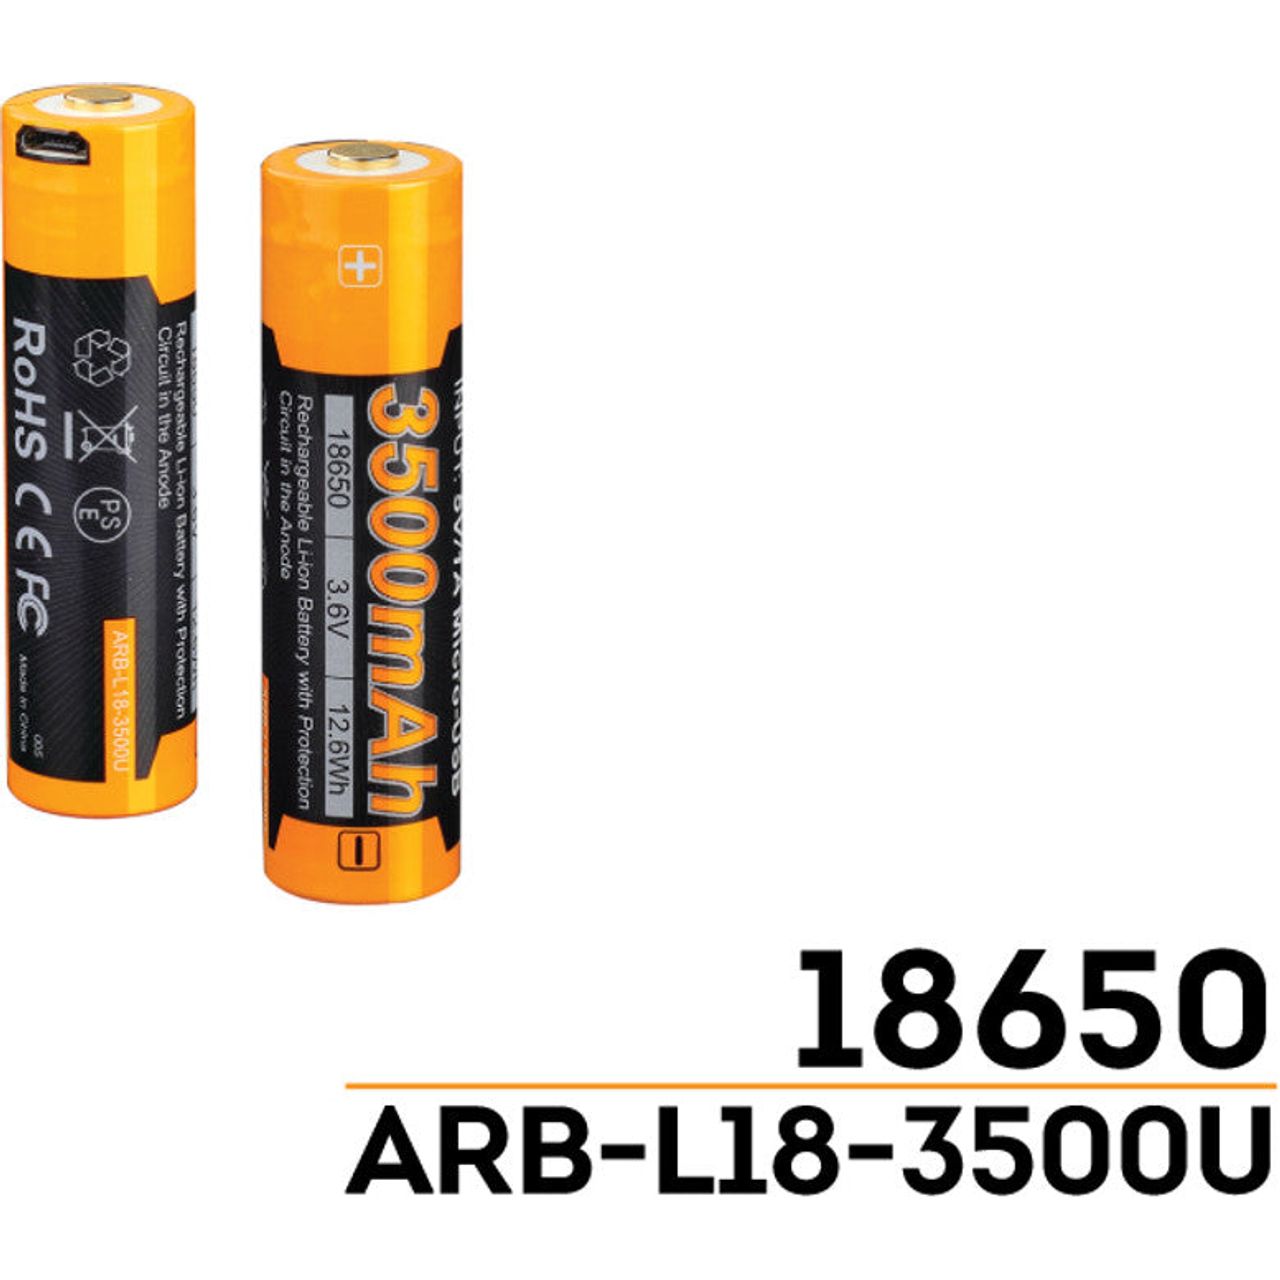 ARB-L18-3500U Rechargeable 3500mAh 18650 Battery | Climbing